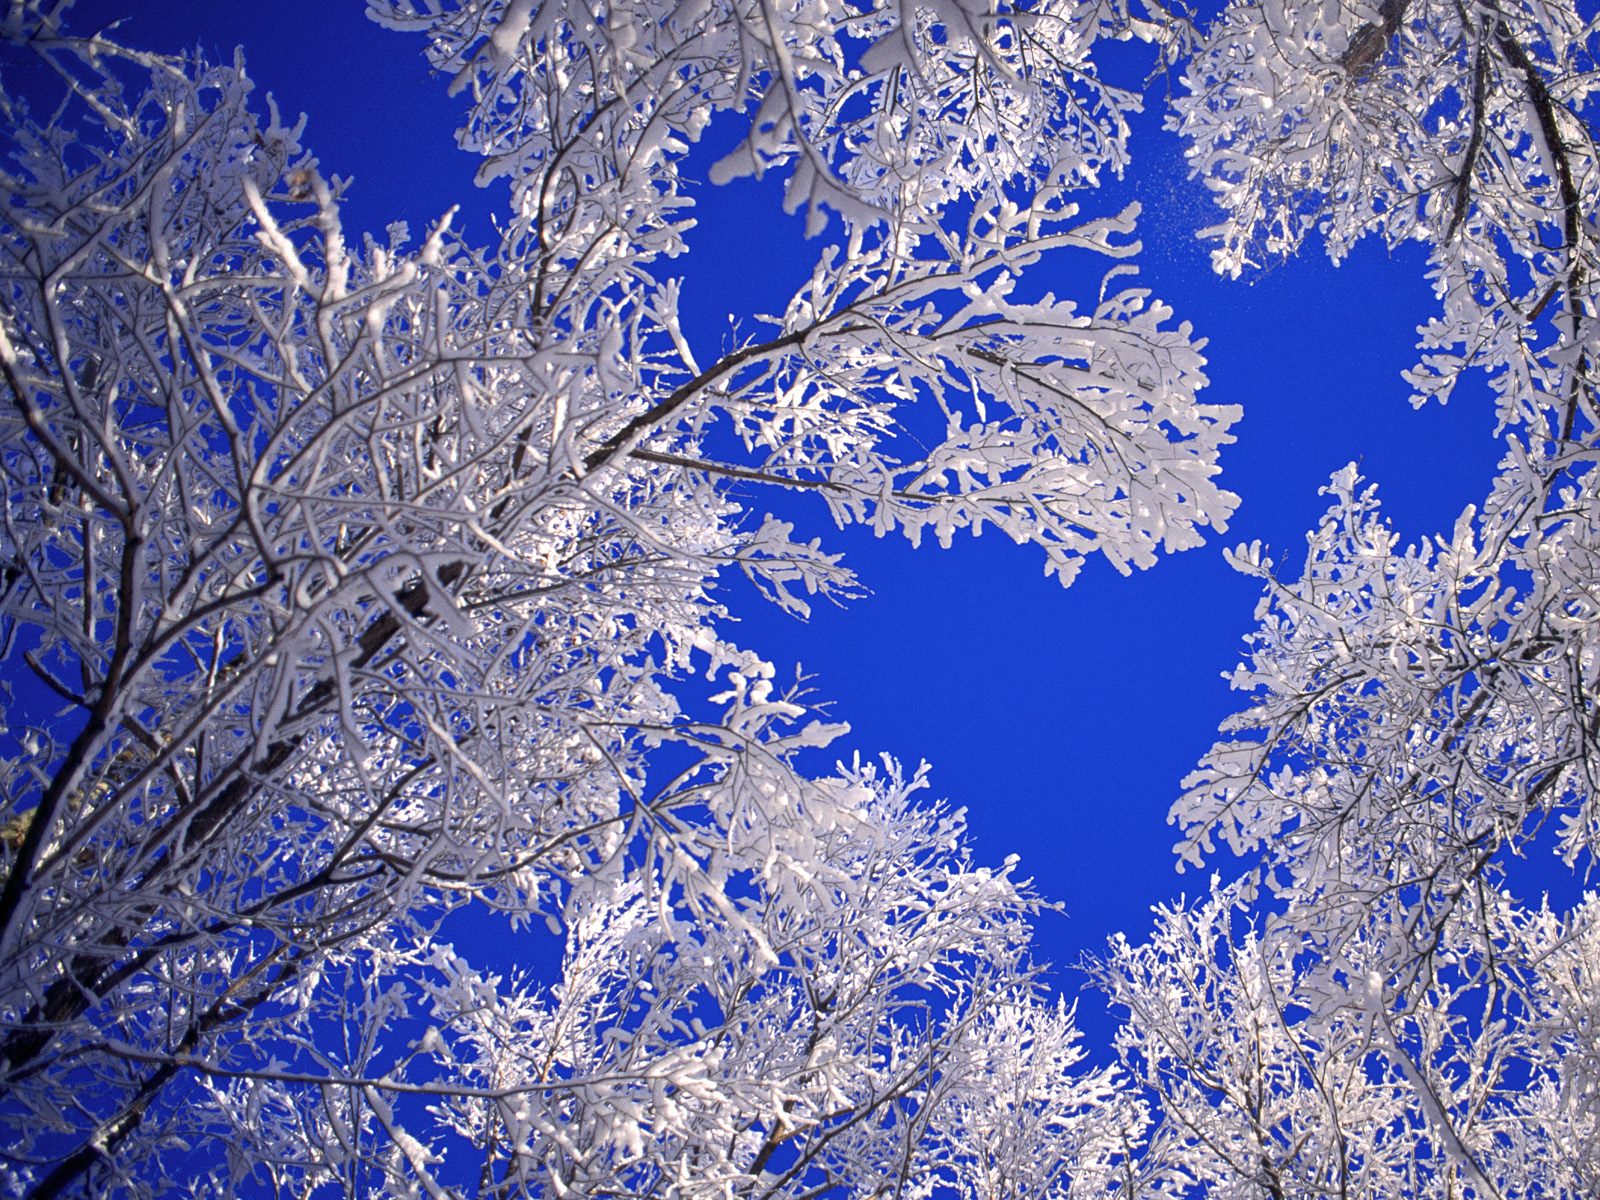 Frozen tree against a vibrant sky.